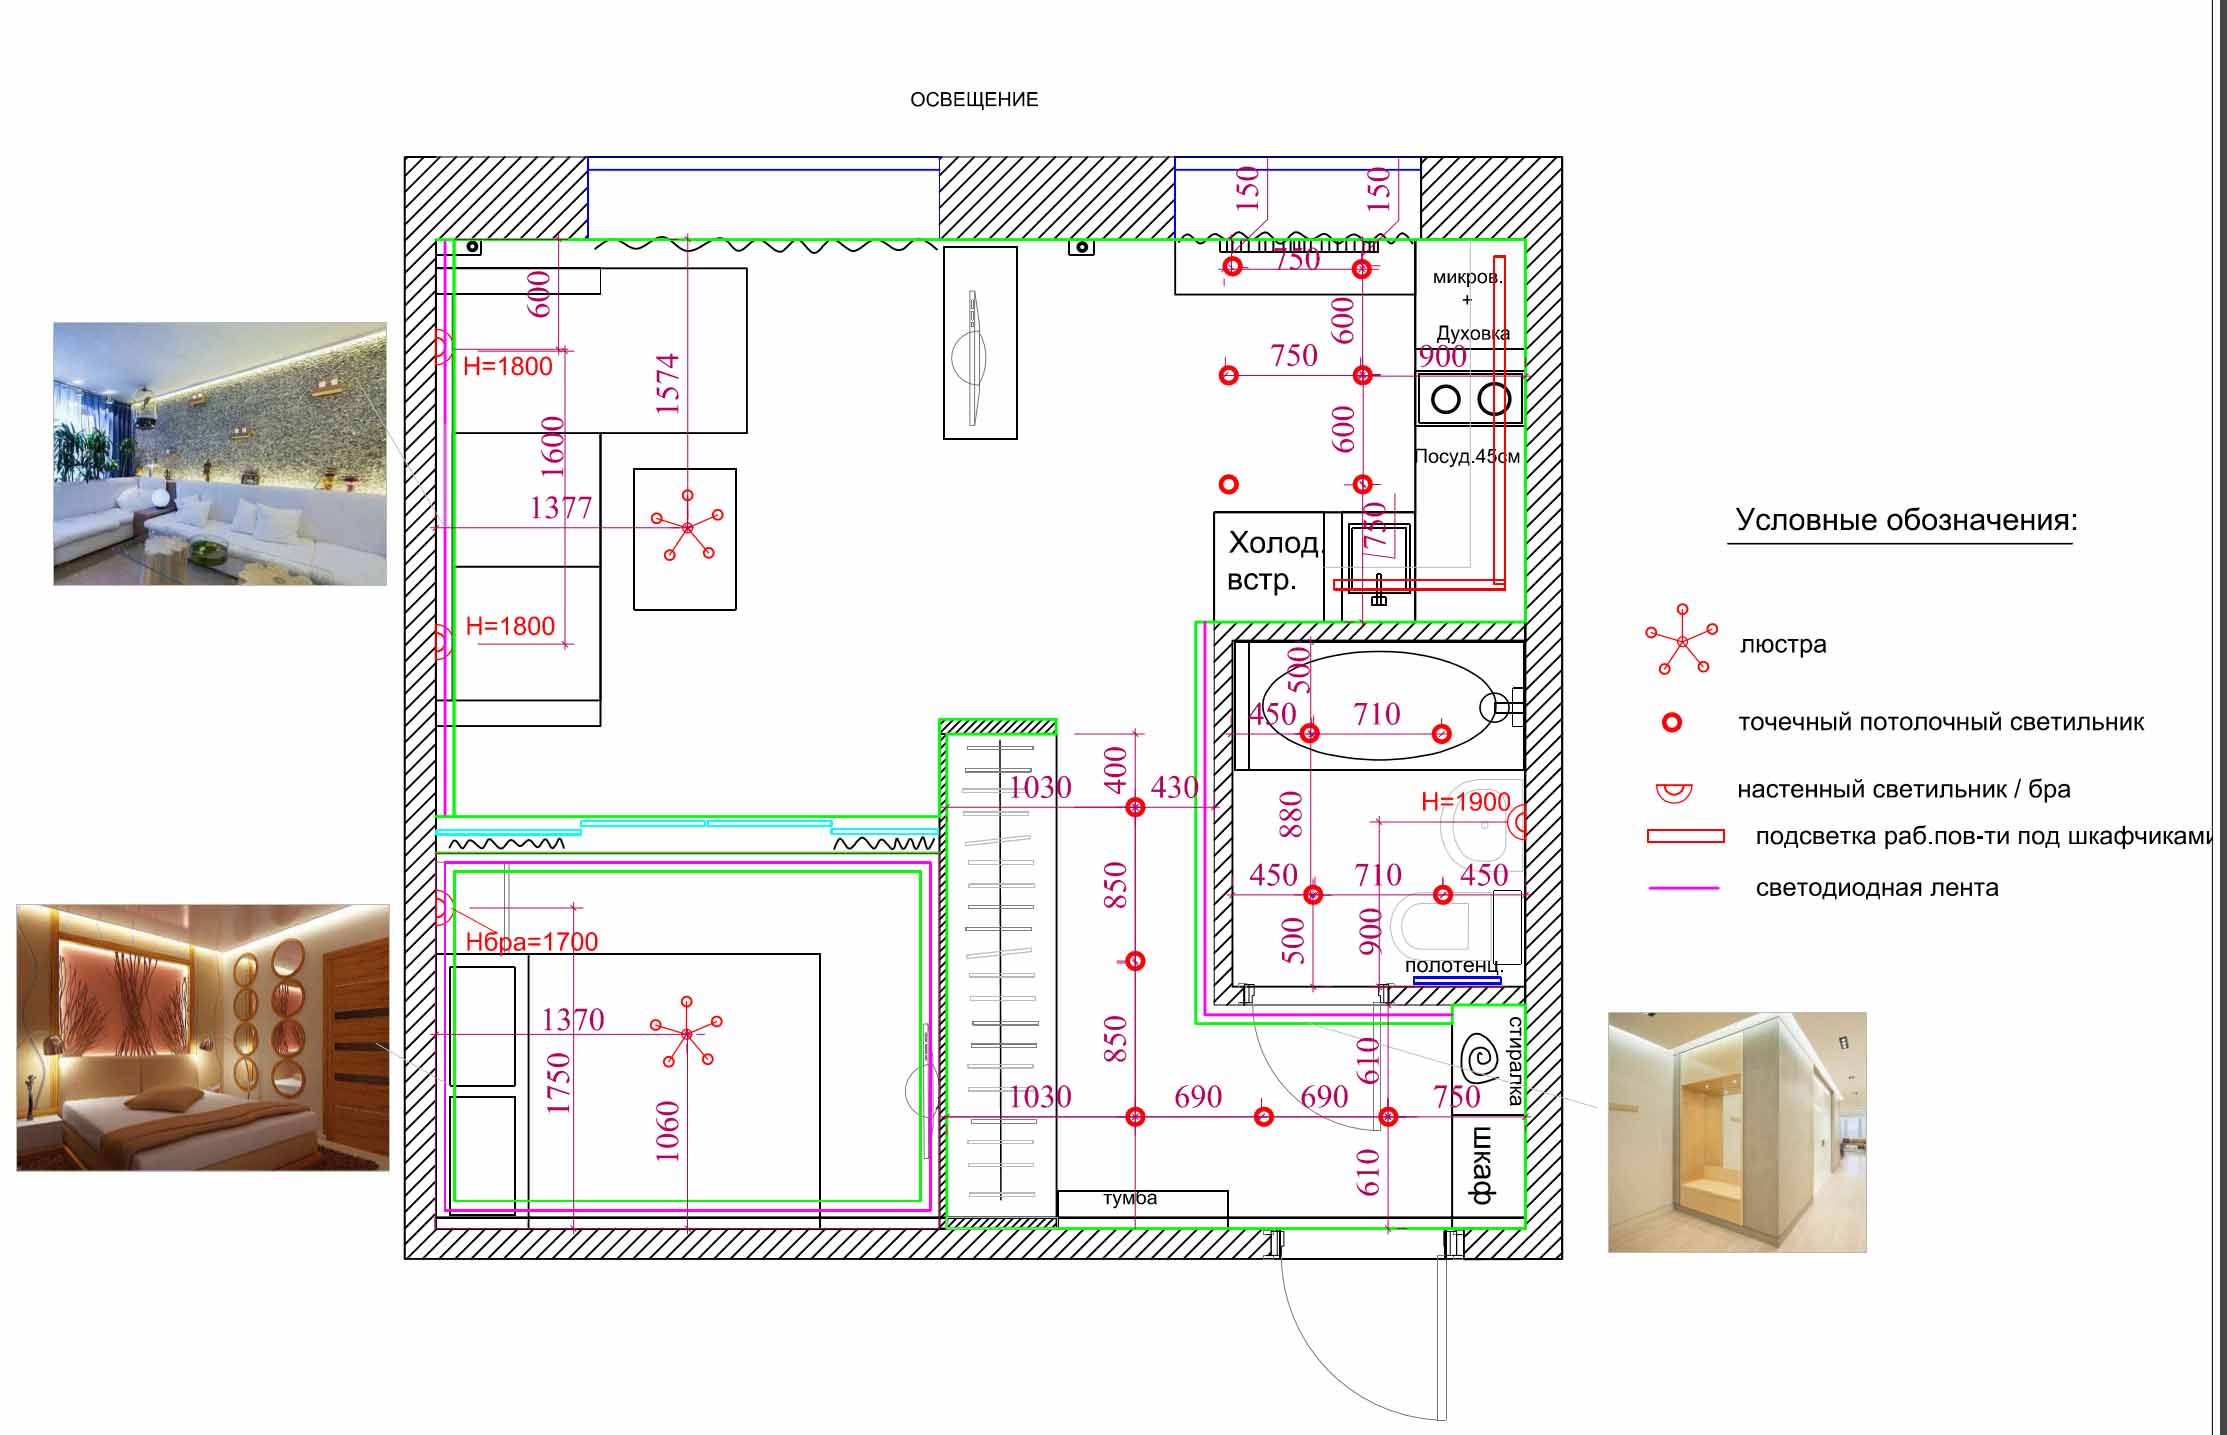 Дизайн-проект квартиры-студии: интерьер и планировка